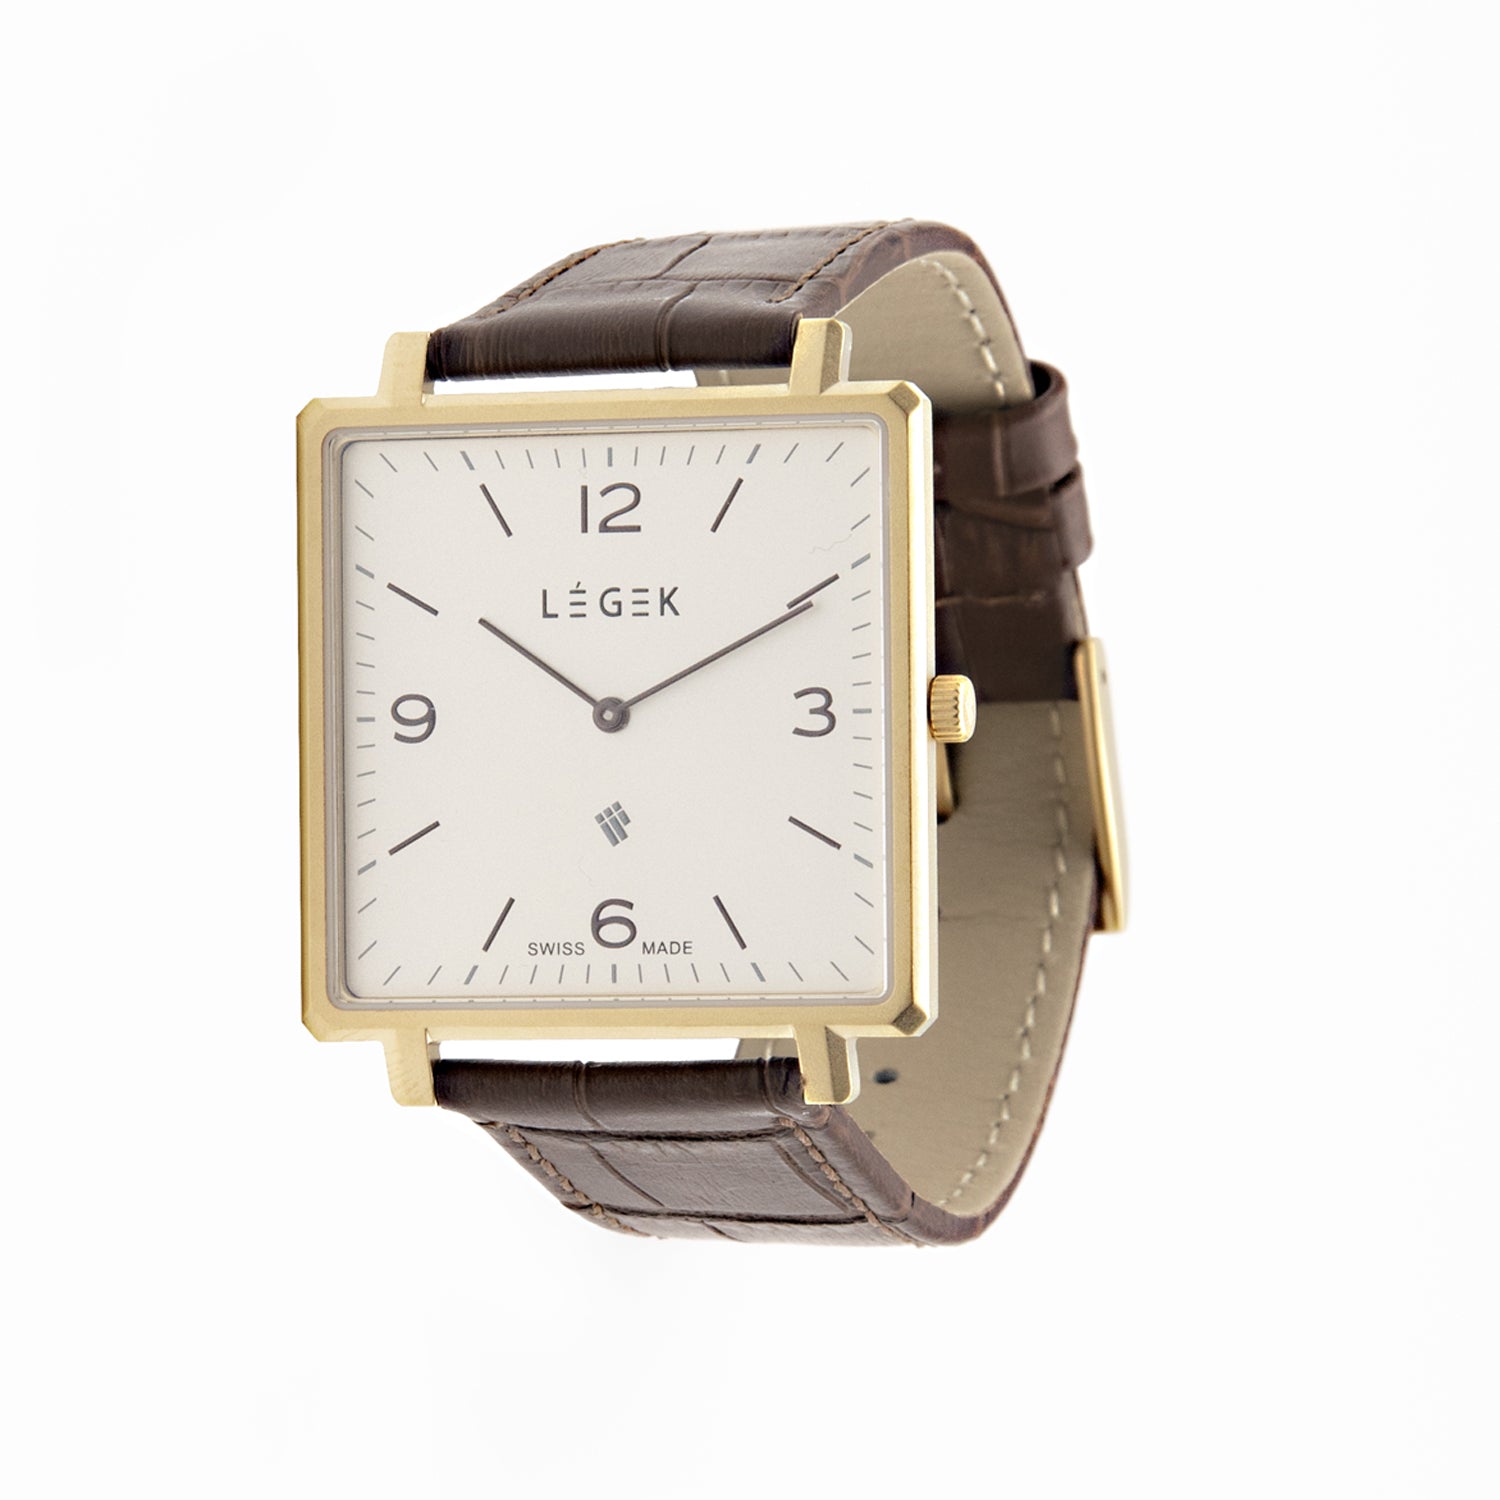 LEGIC Men's Quartz Watch, White Dial - LEG-0024